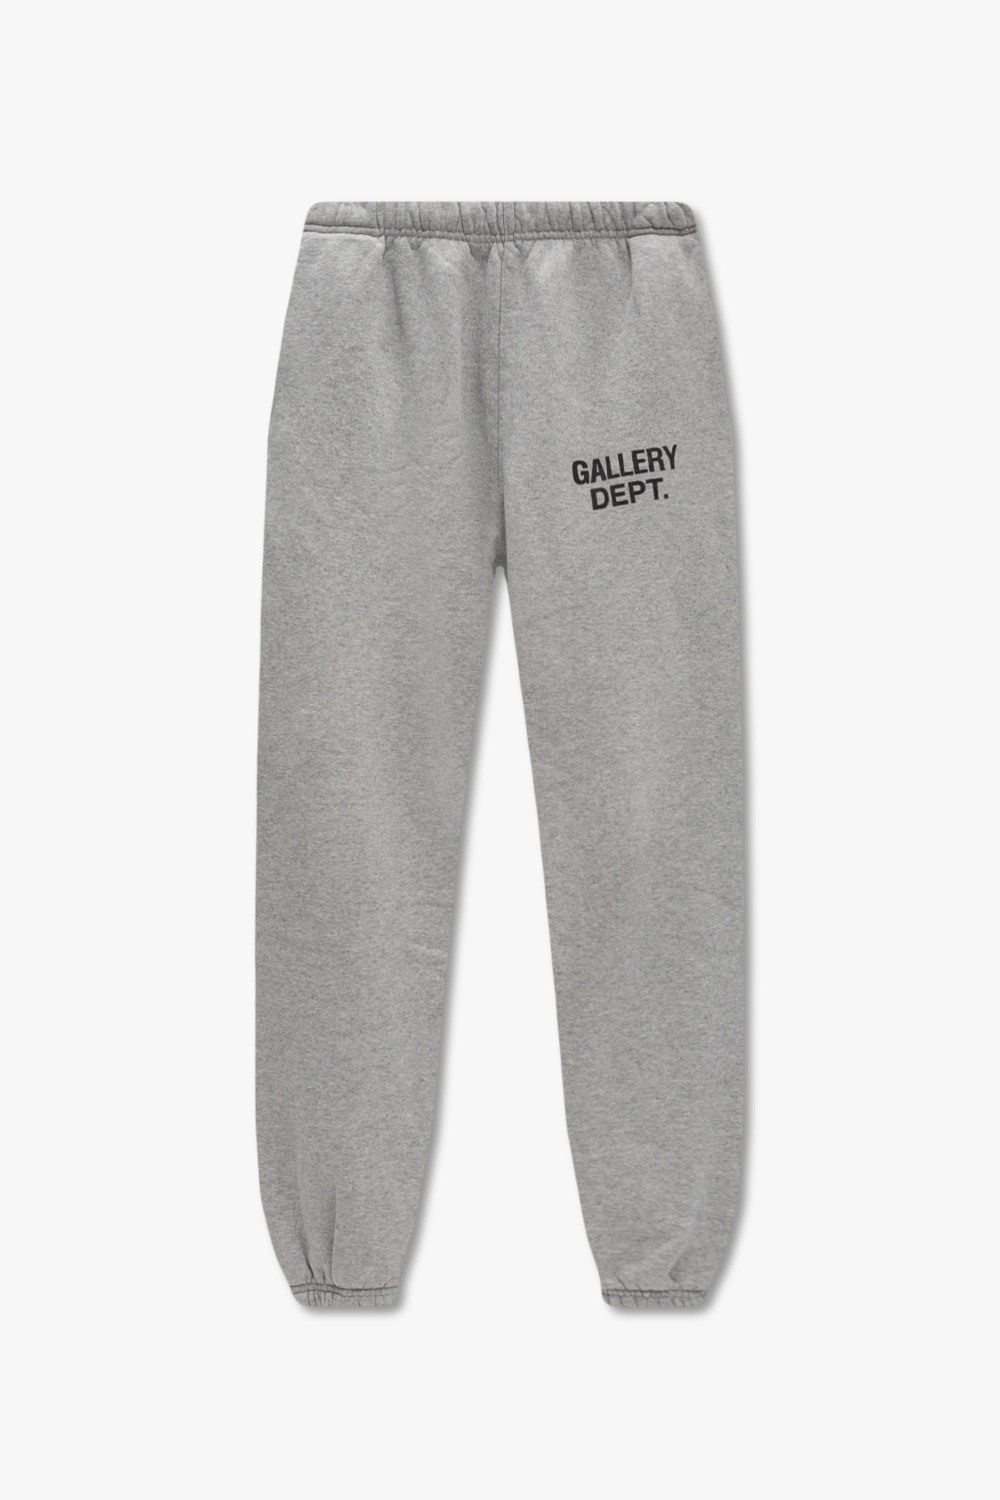 Grey Jersey sweatpants GALLERY DEPT. - IetpShops Croatia - Elastic waist  pants that sit under the belly